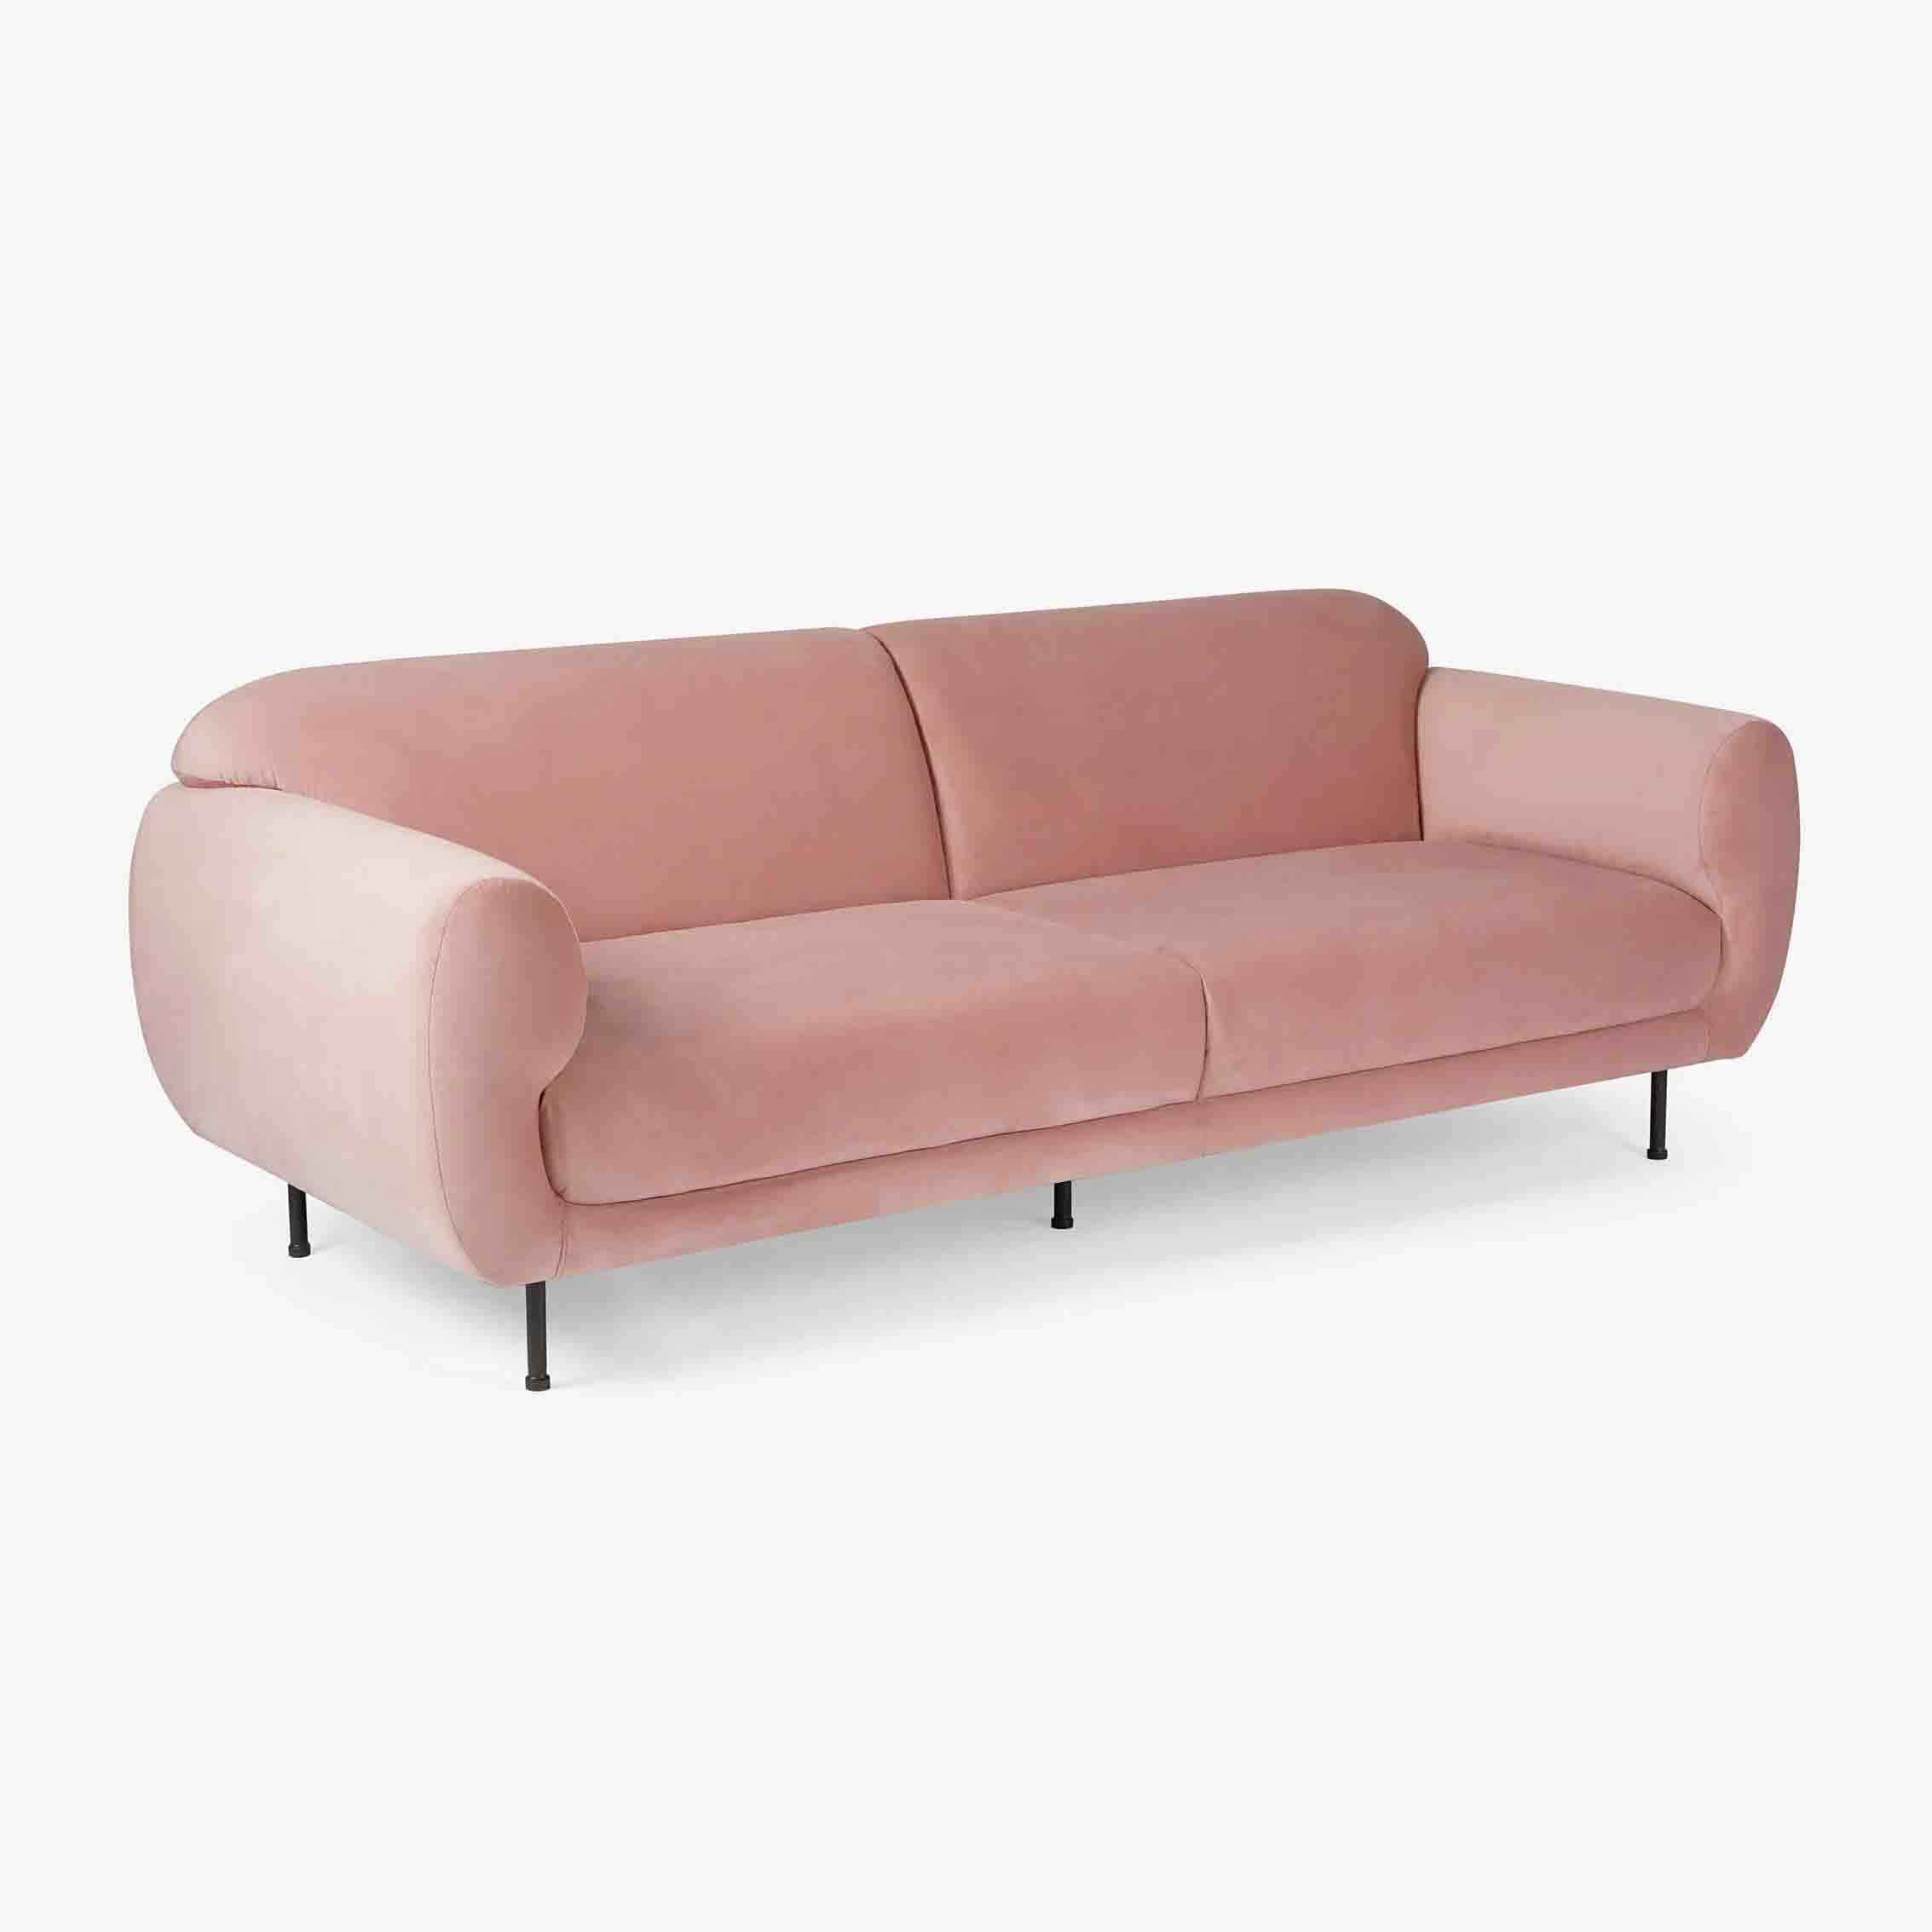 Ew Sofa